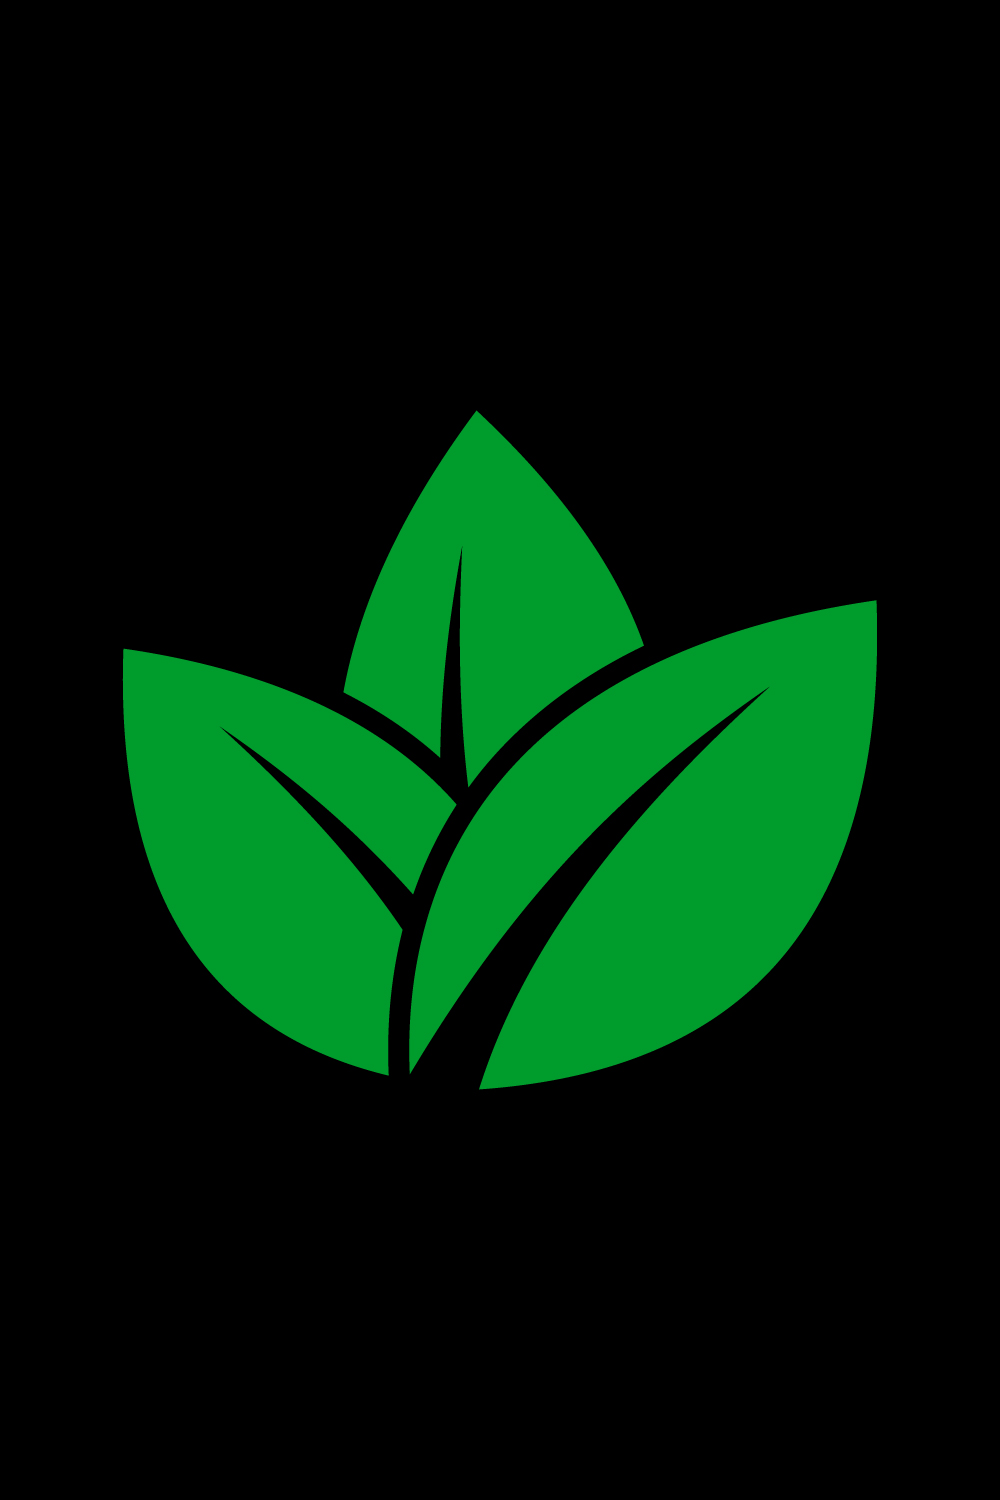 Leaf, plant, logo Green leaves, nature symbol, Vector design template pinterest preview image.